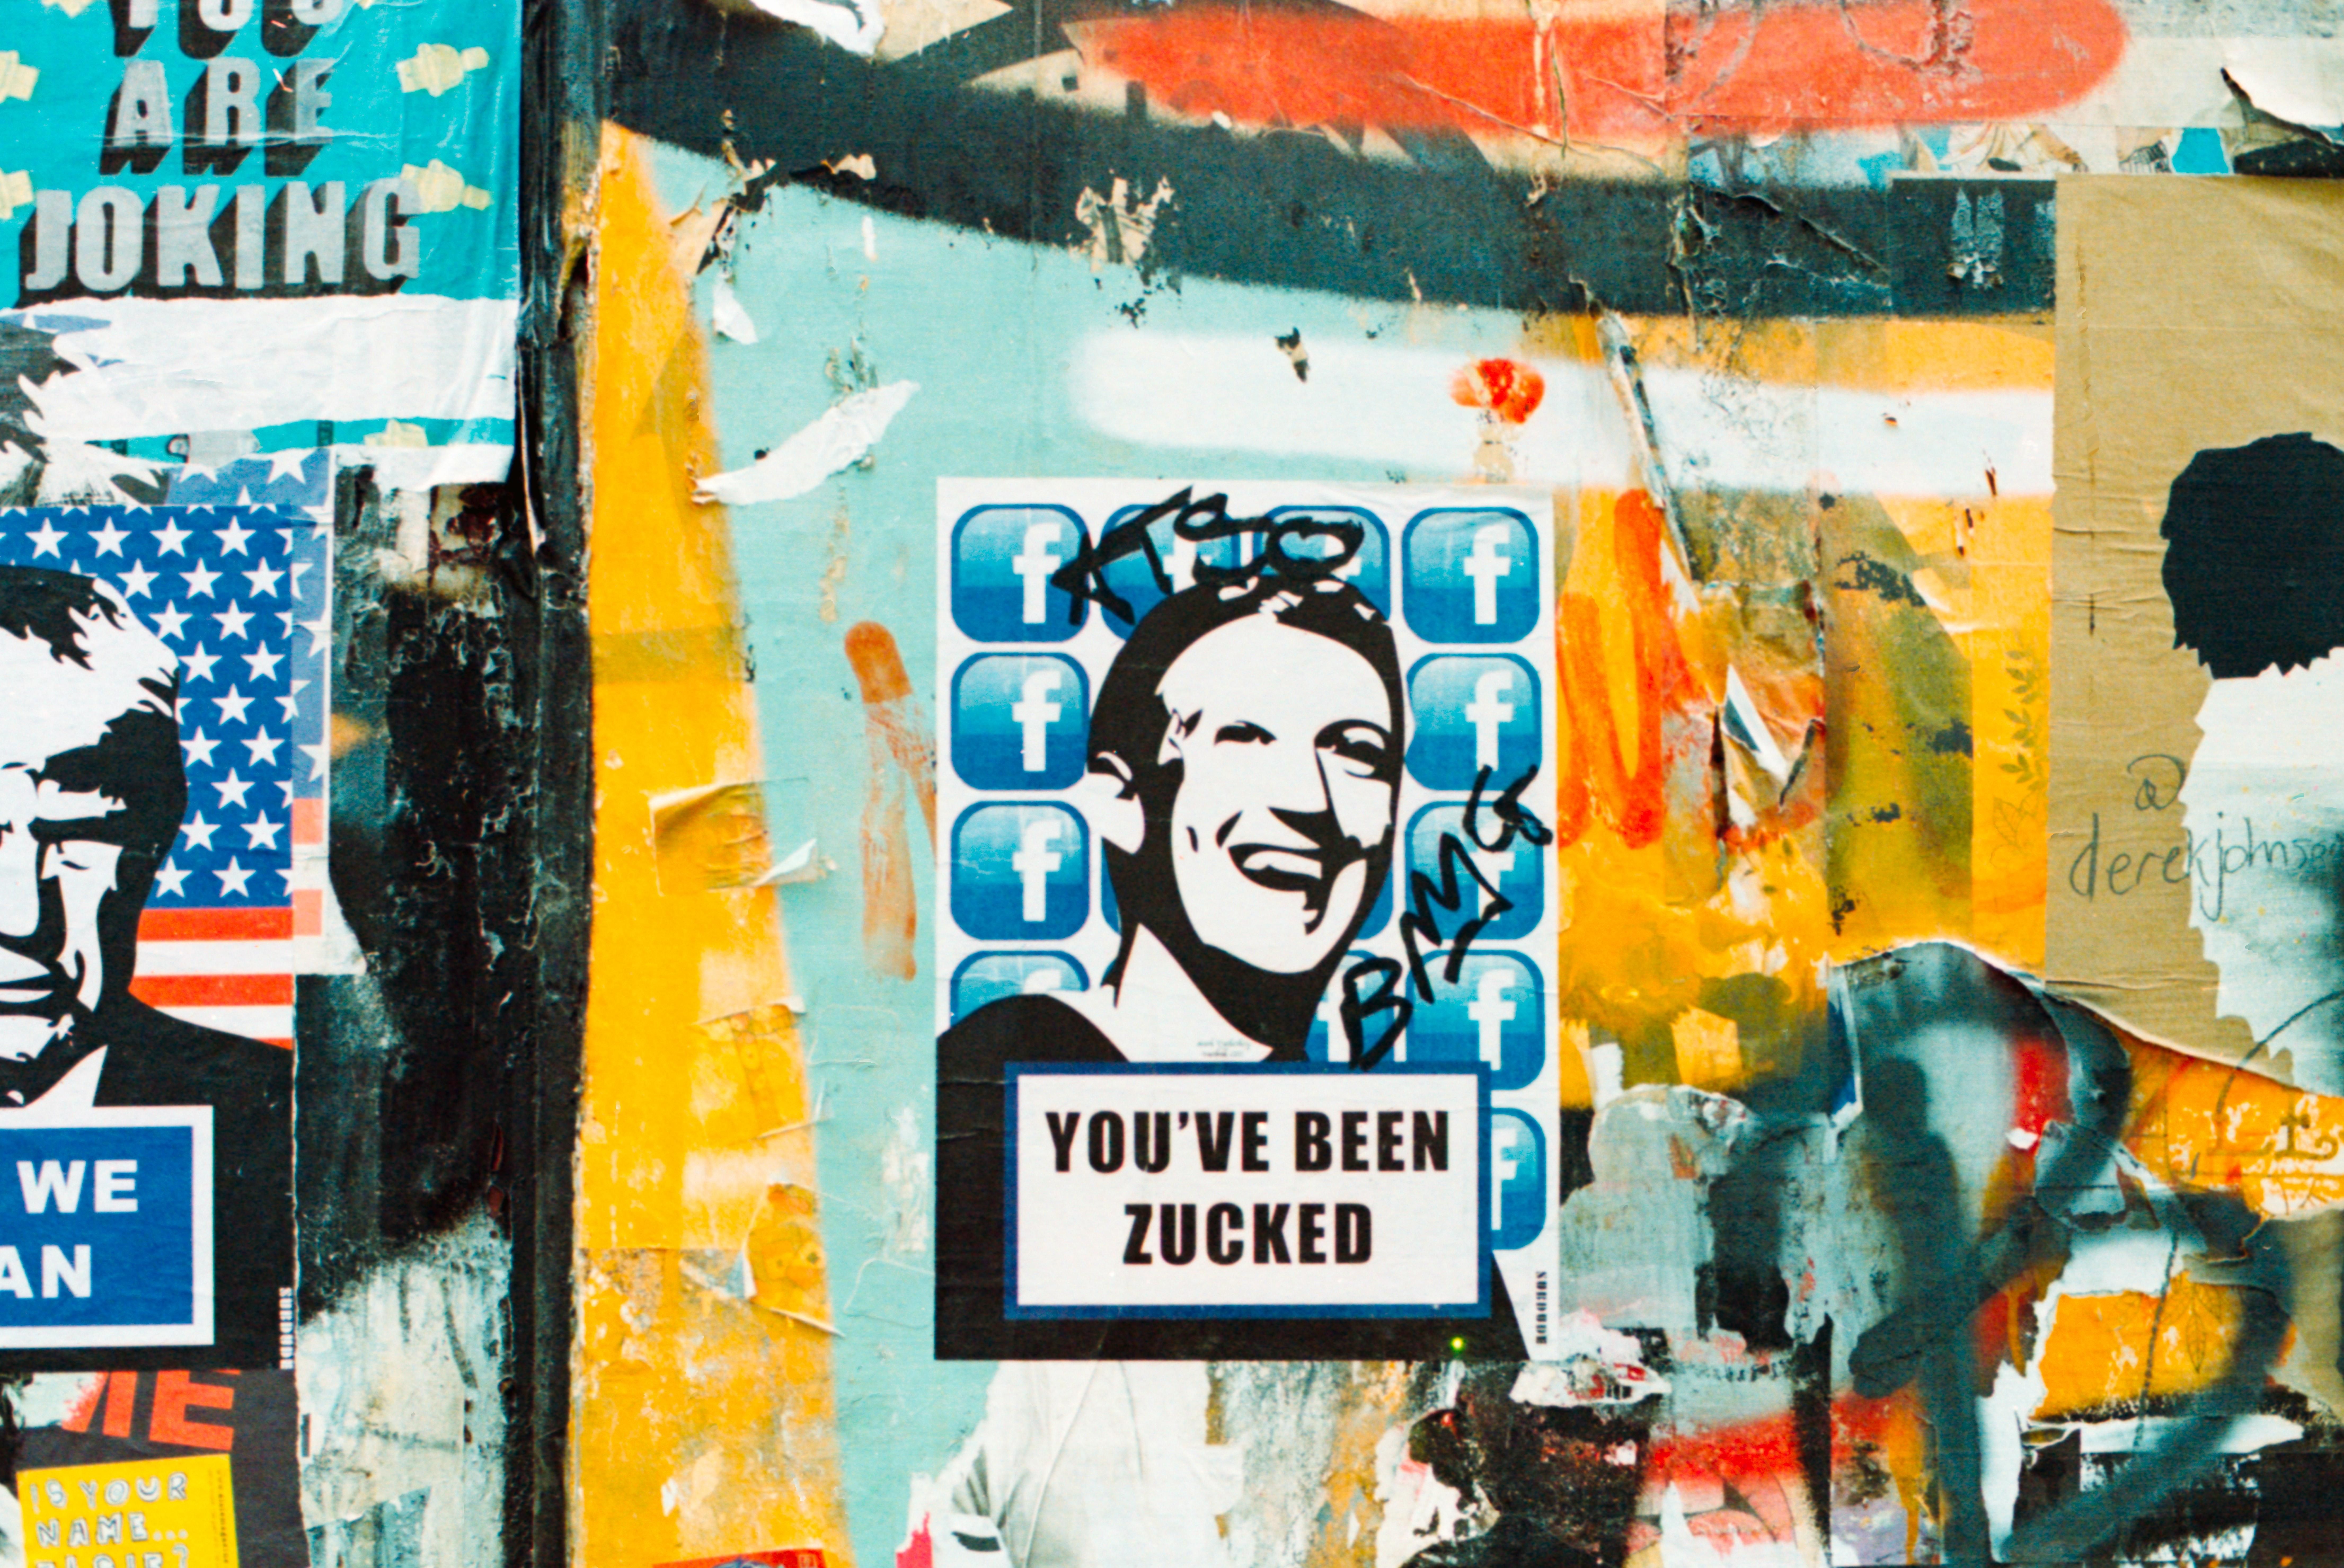 Mark Zuckerberg képe egy graffitis falon "You've been Zucked" felirattal